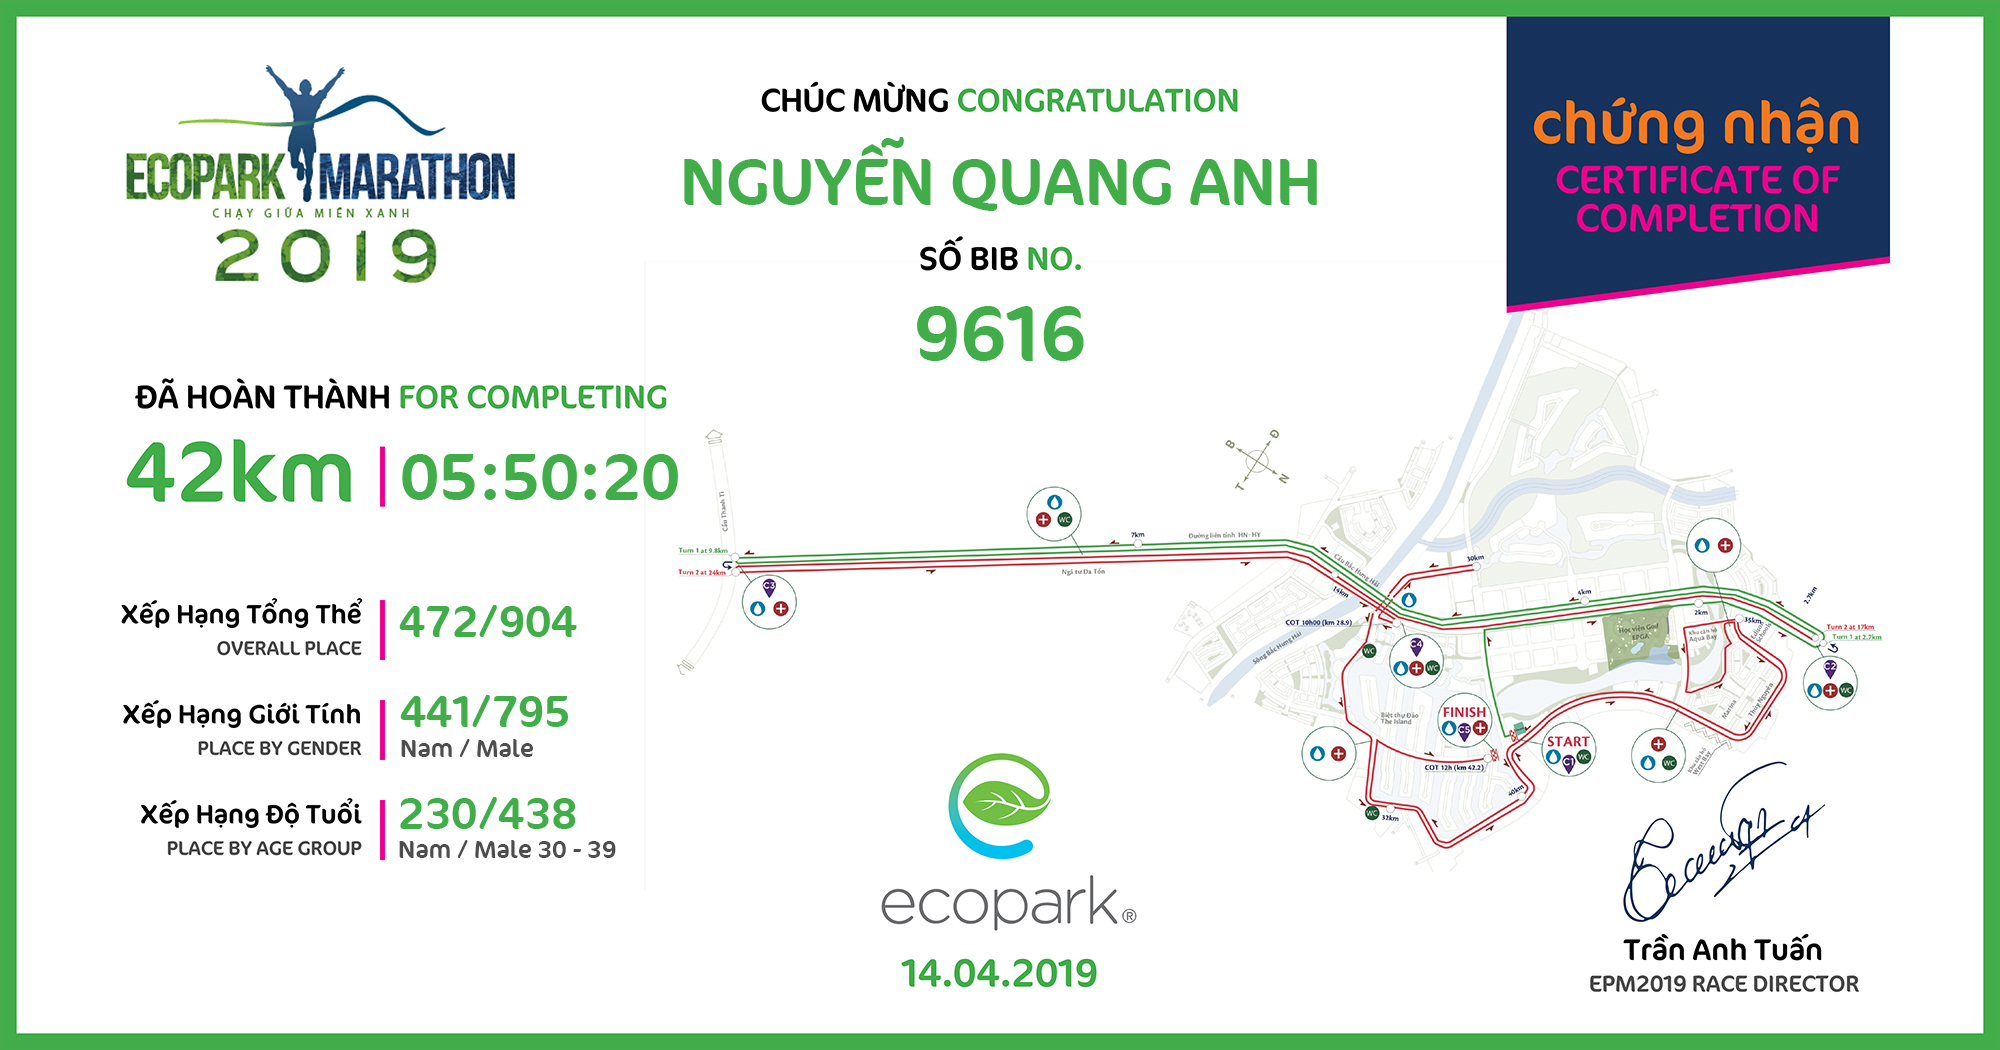 9616 - Nguyễn Quang Anh